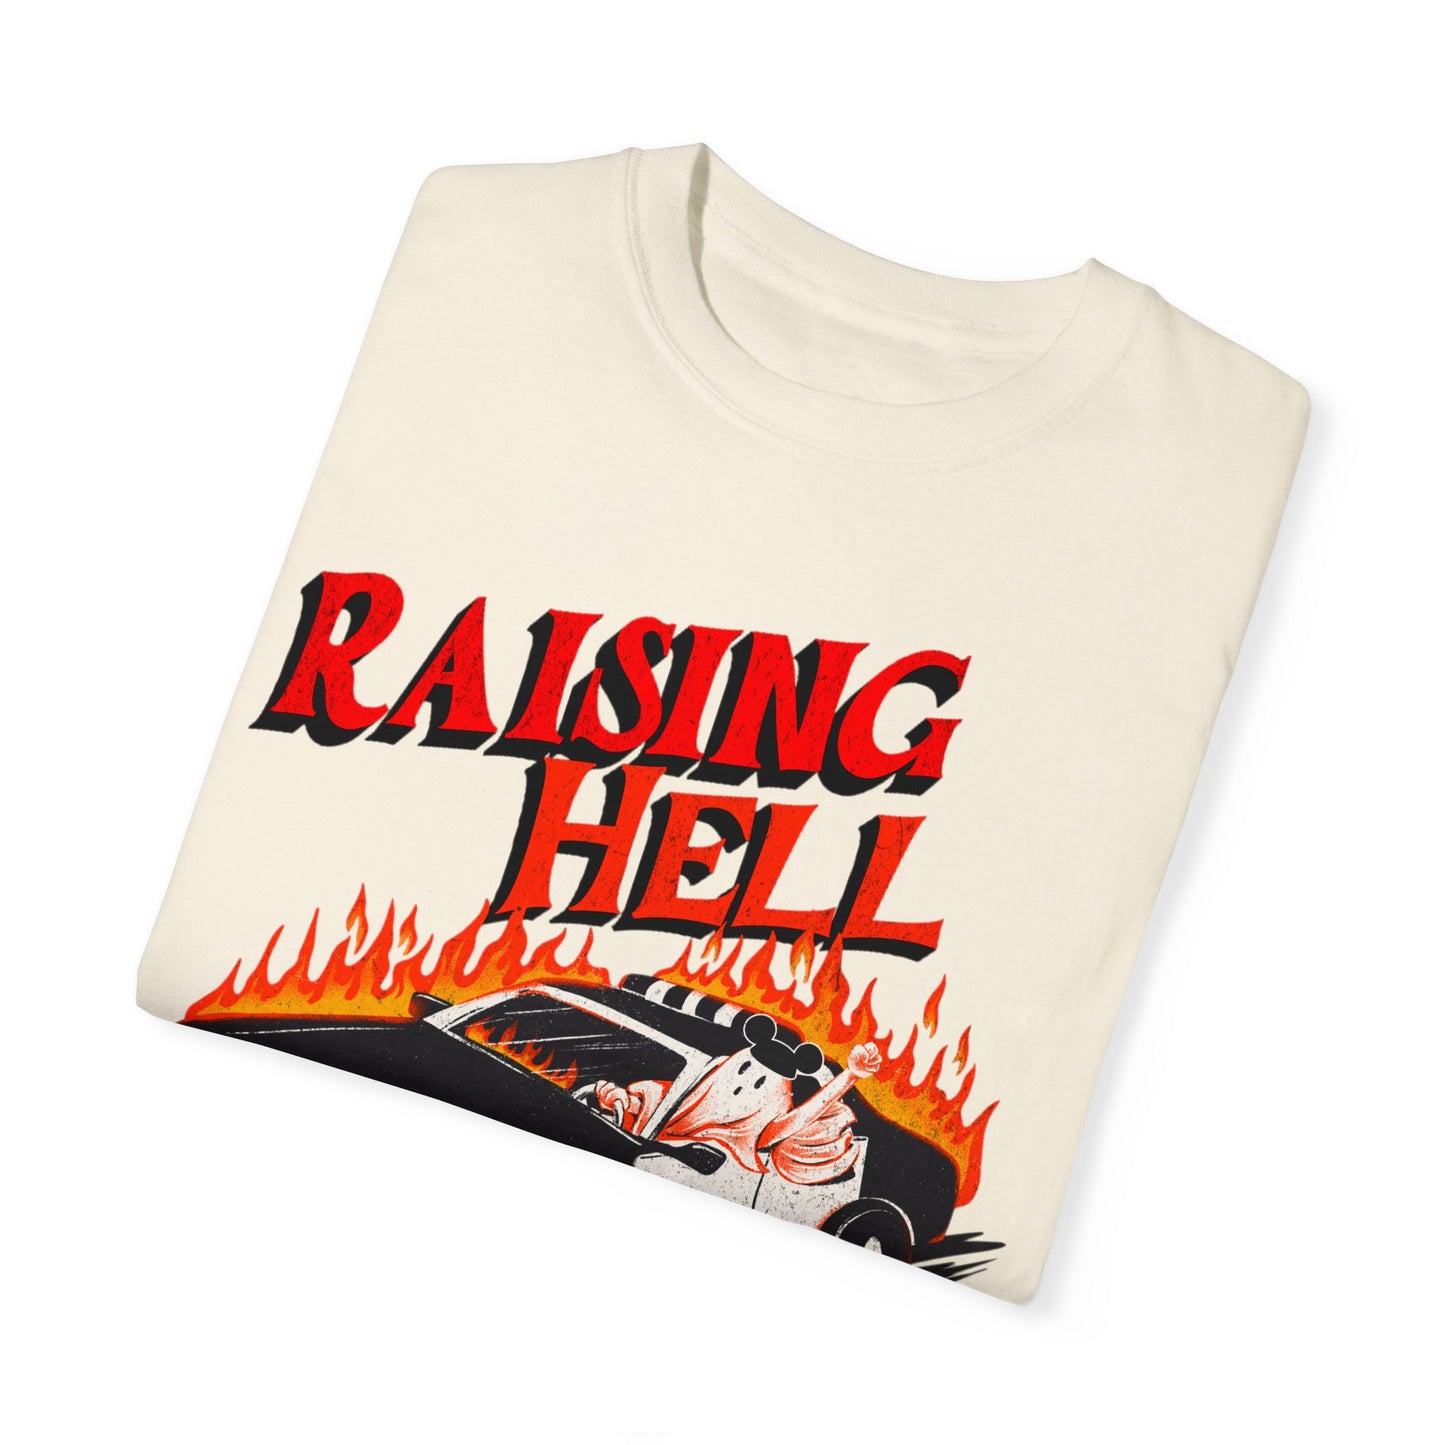 Raising Hell - Tee